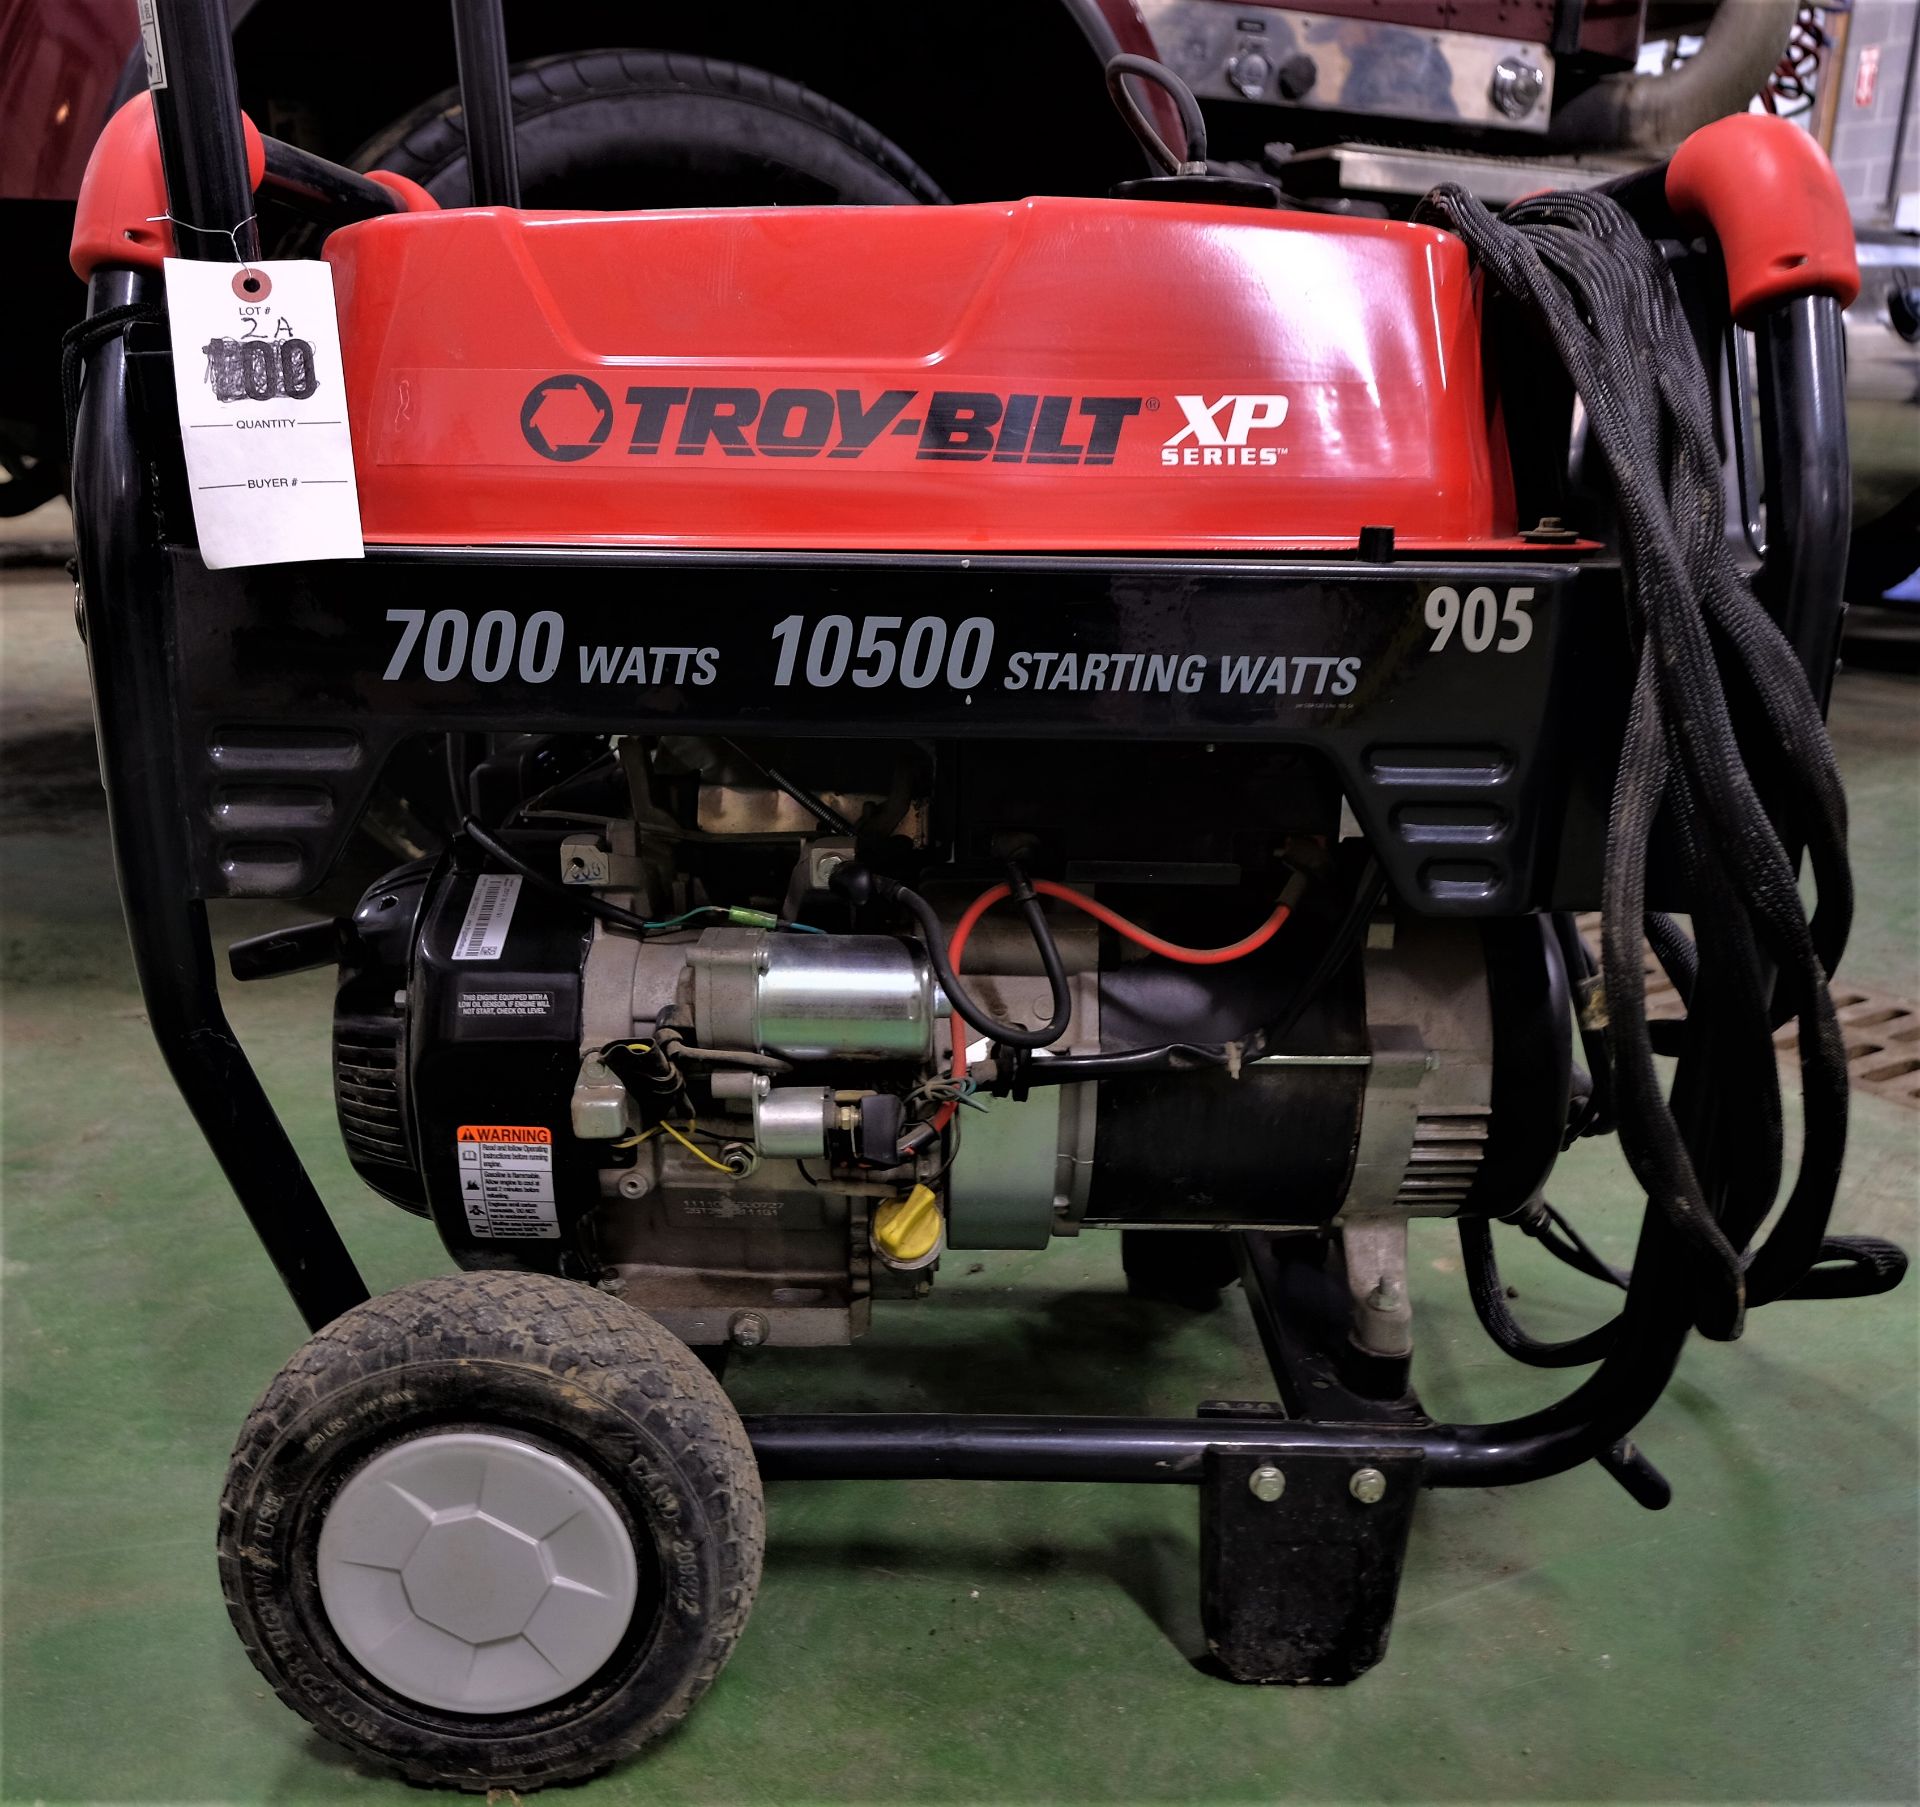 Troy-Bilt XP Generator (2012) - 1019415248 - 7000 watts, 10500 starting watts